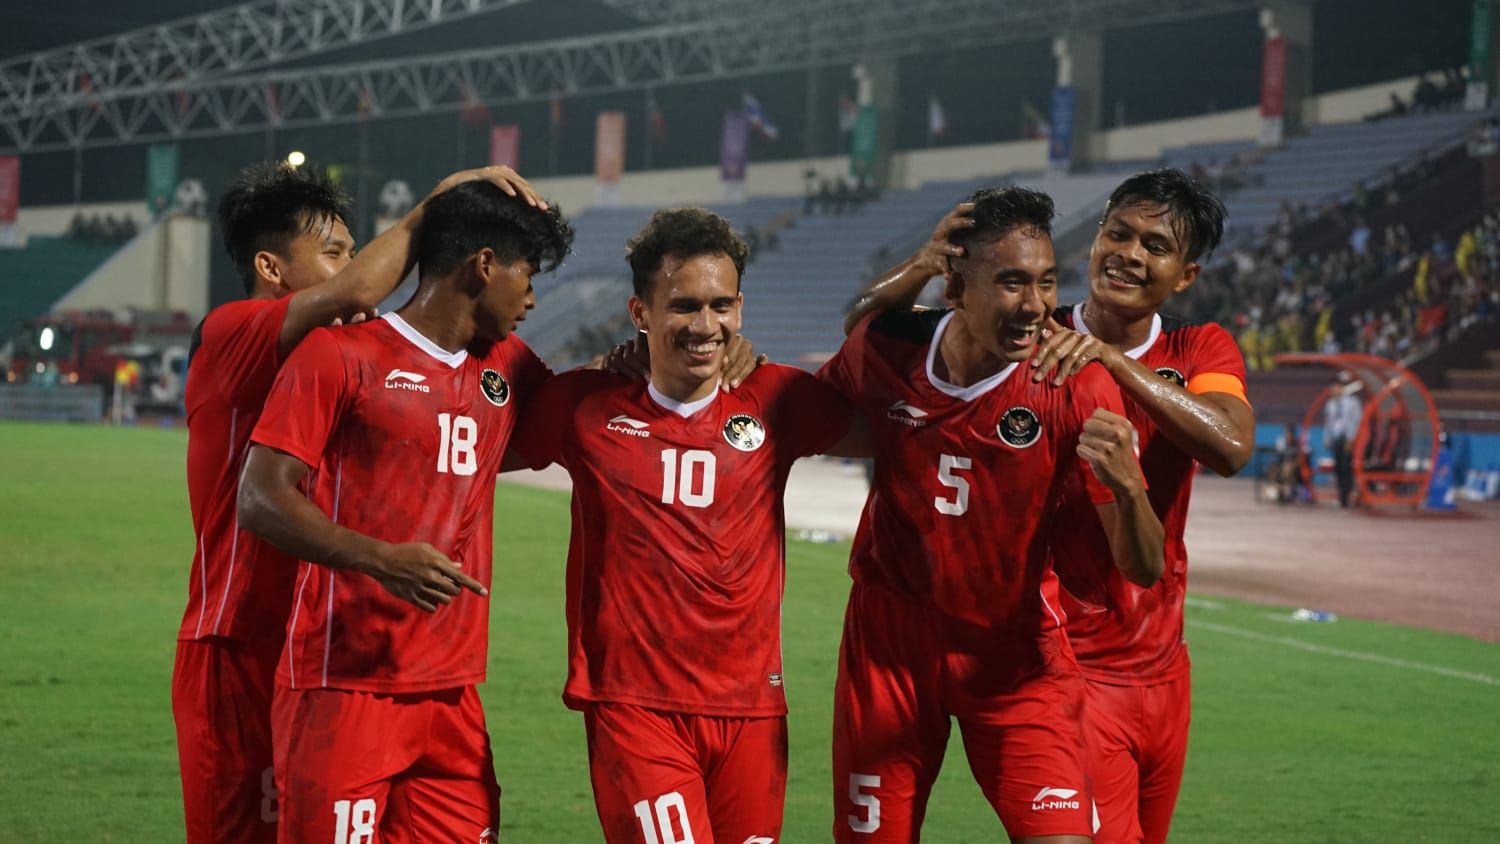 Lima pemain timnas U-23 Indonesia dari kiri ke kanan: Witan Sulaeman, Irfan Jauhari, Egy Maulana Vikri, Rizky Ridho, dan Fachruddin Aryanto merayakan gol ke gawang Timor Leste dalam laga sepak bola putra SEA Games 2021, 10 Maret 2022.